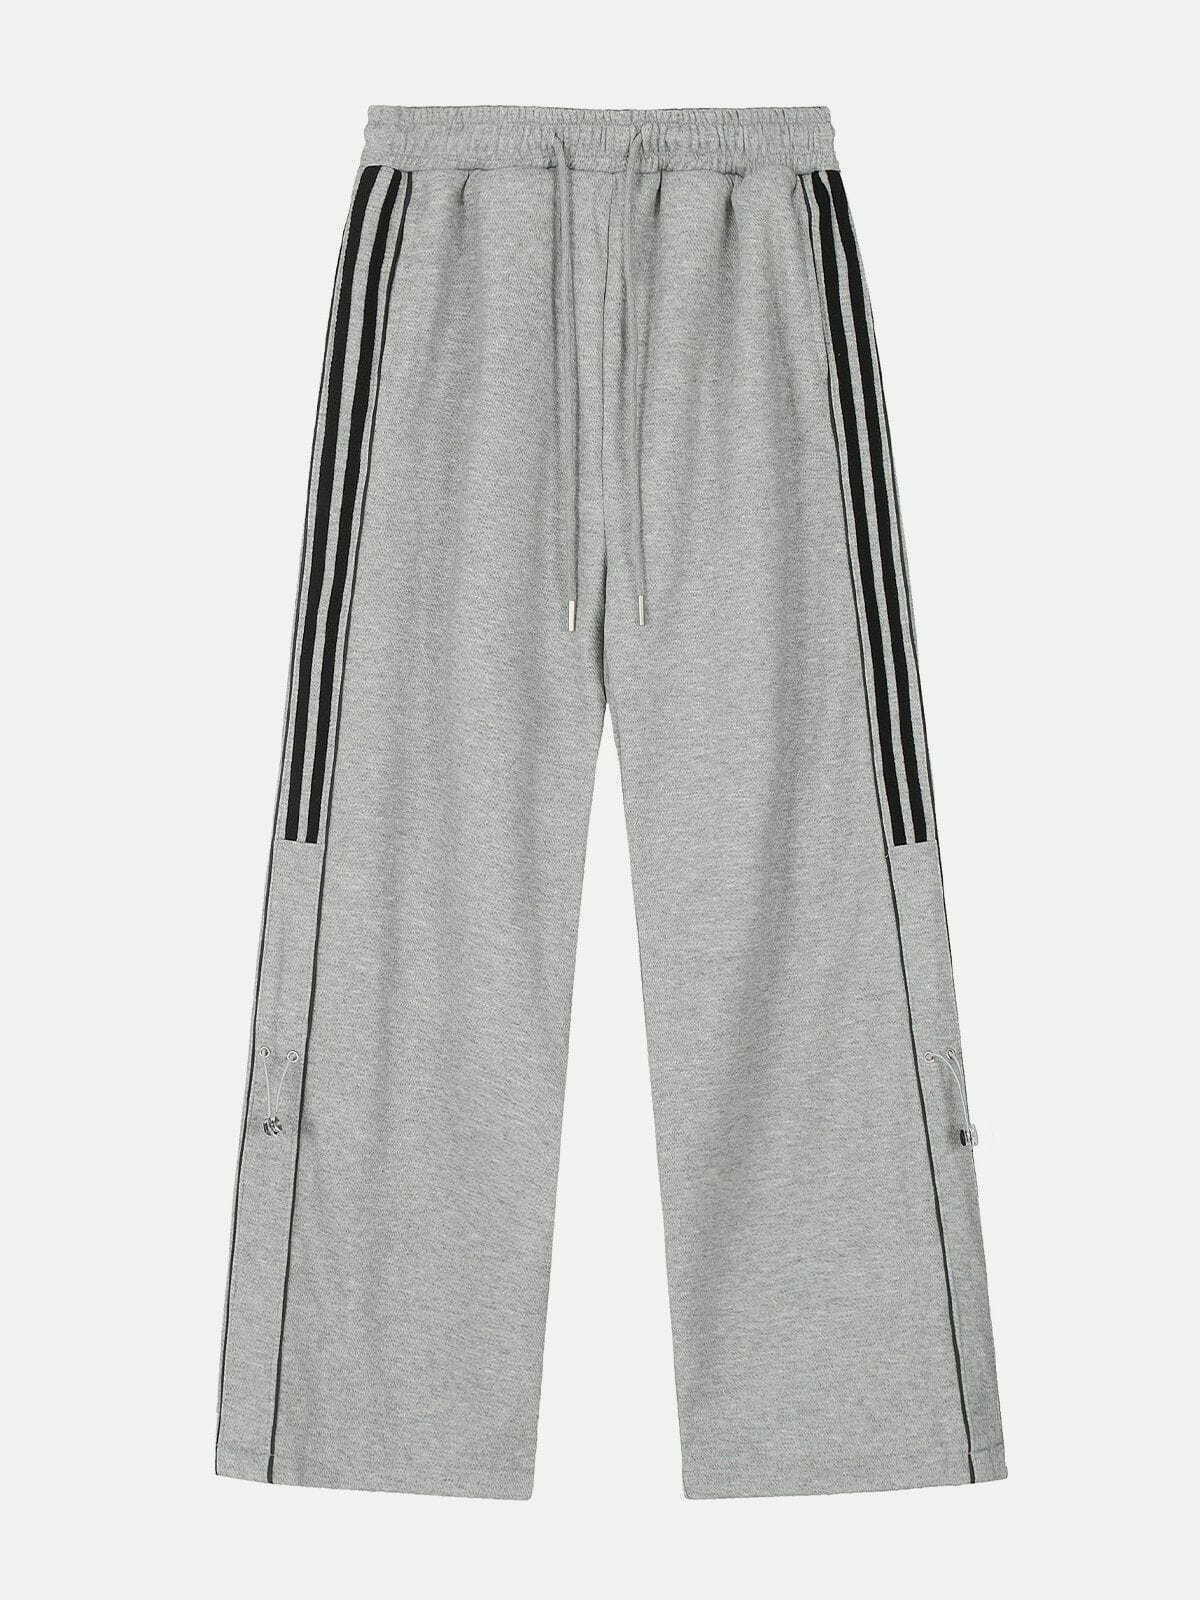 trendy drawstring stripe sweatpants   urban chic comfort 8141